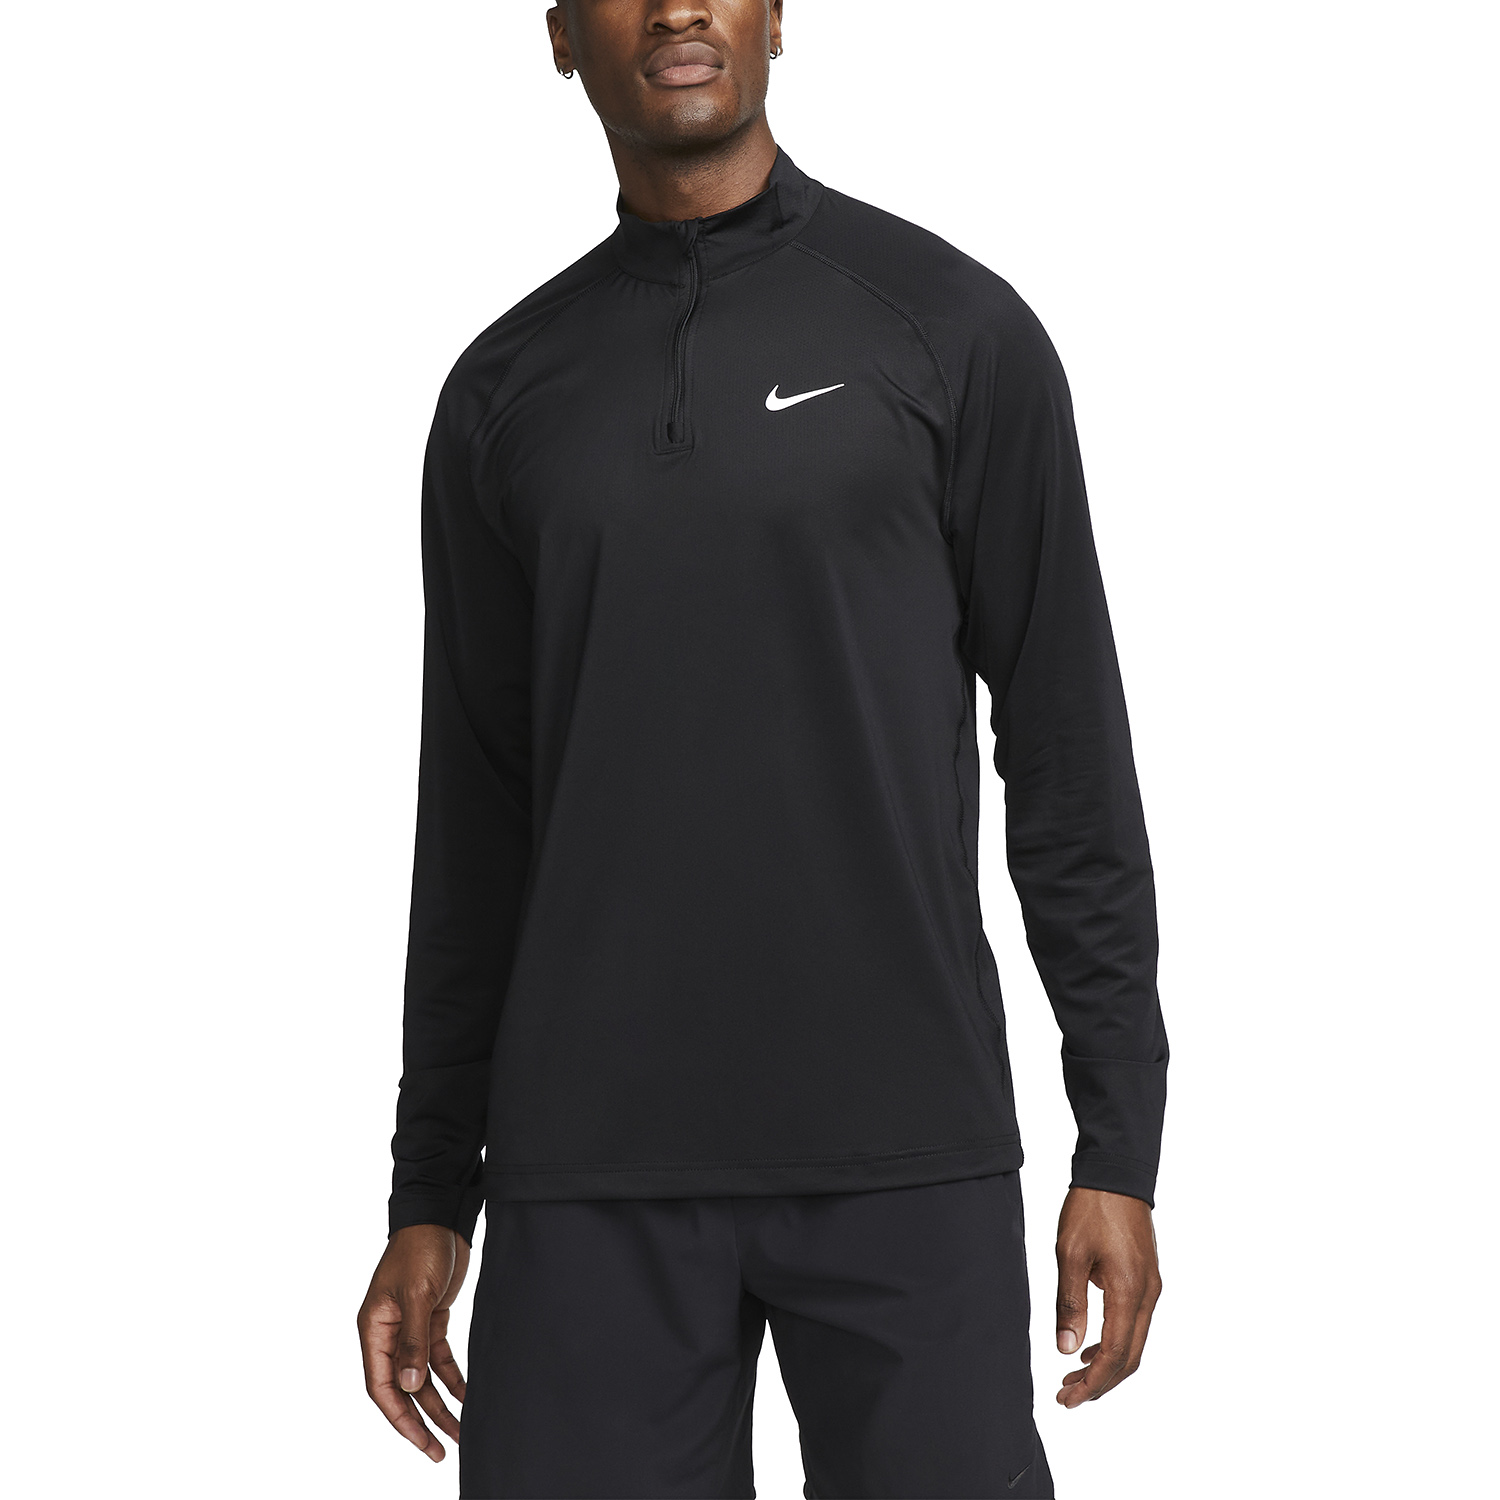 Nike Ready Shirt - Black/White